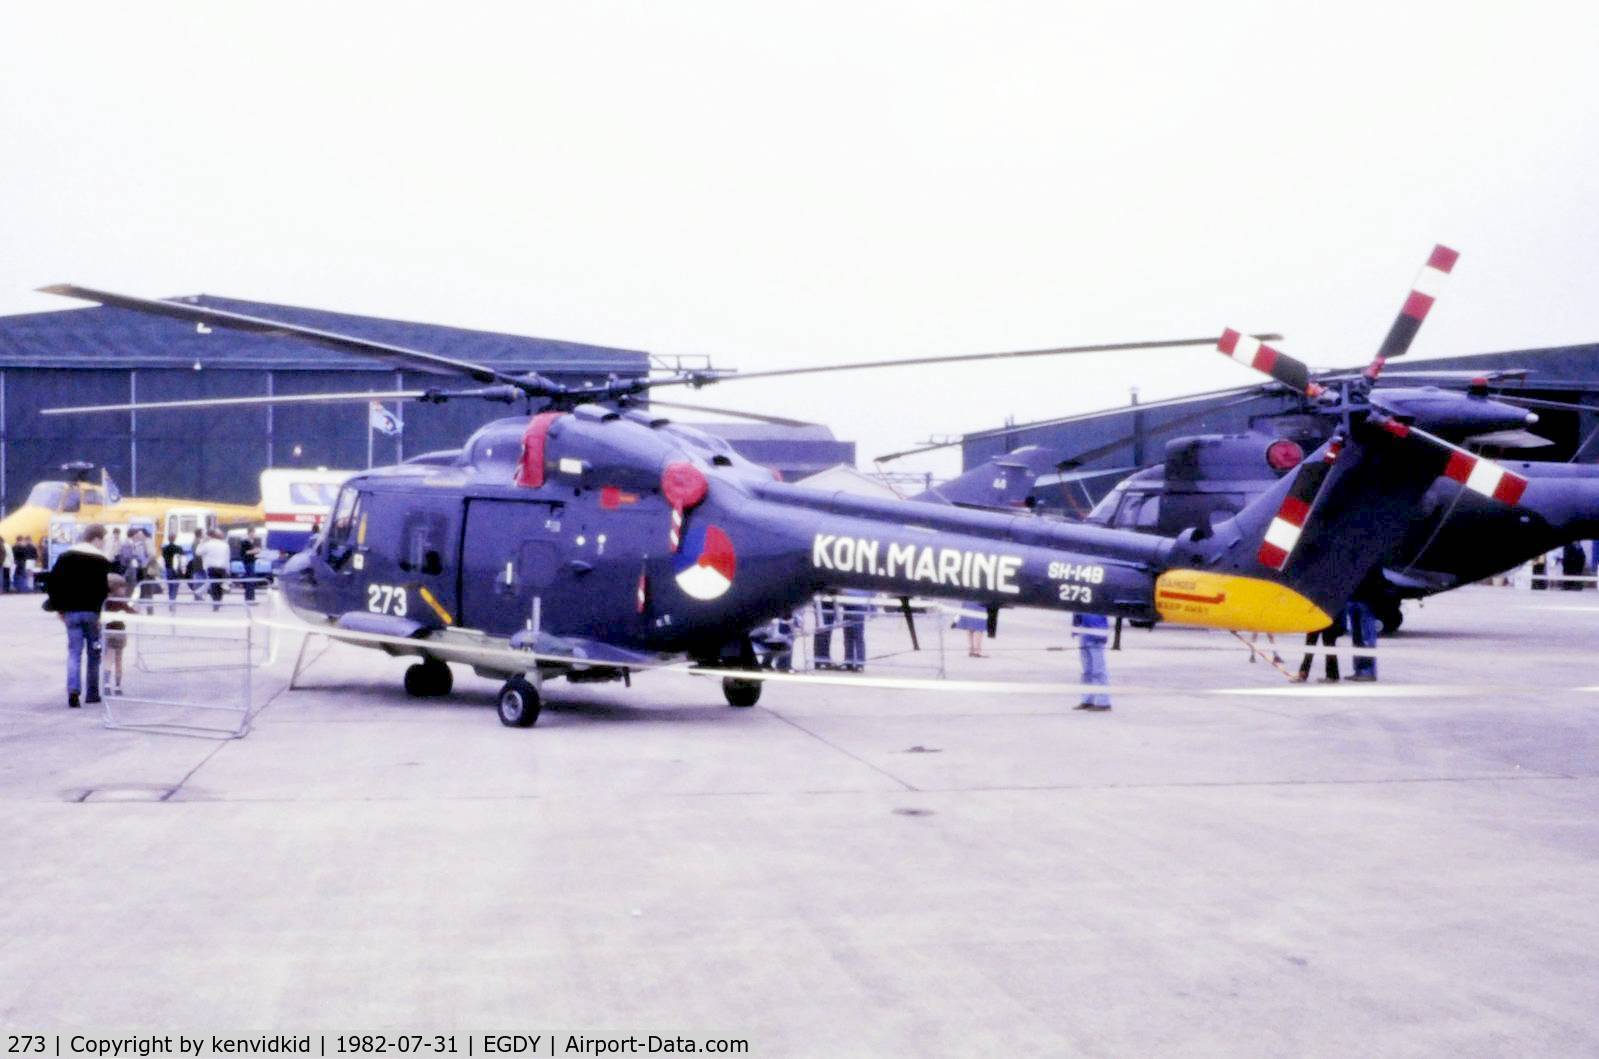 273, 1979 Westland SH-14D Lynx C/N 130, On static display at the 1982 Yeovilton air show.